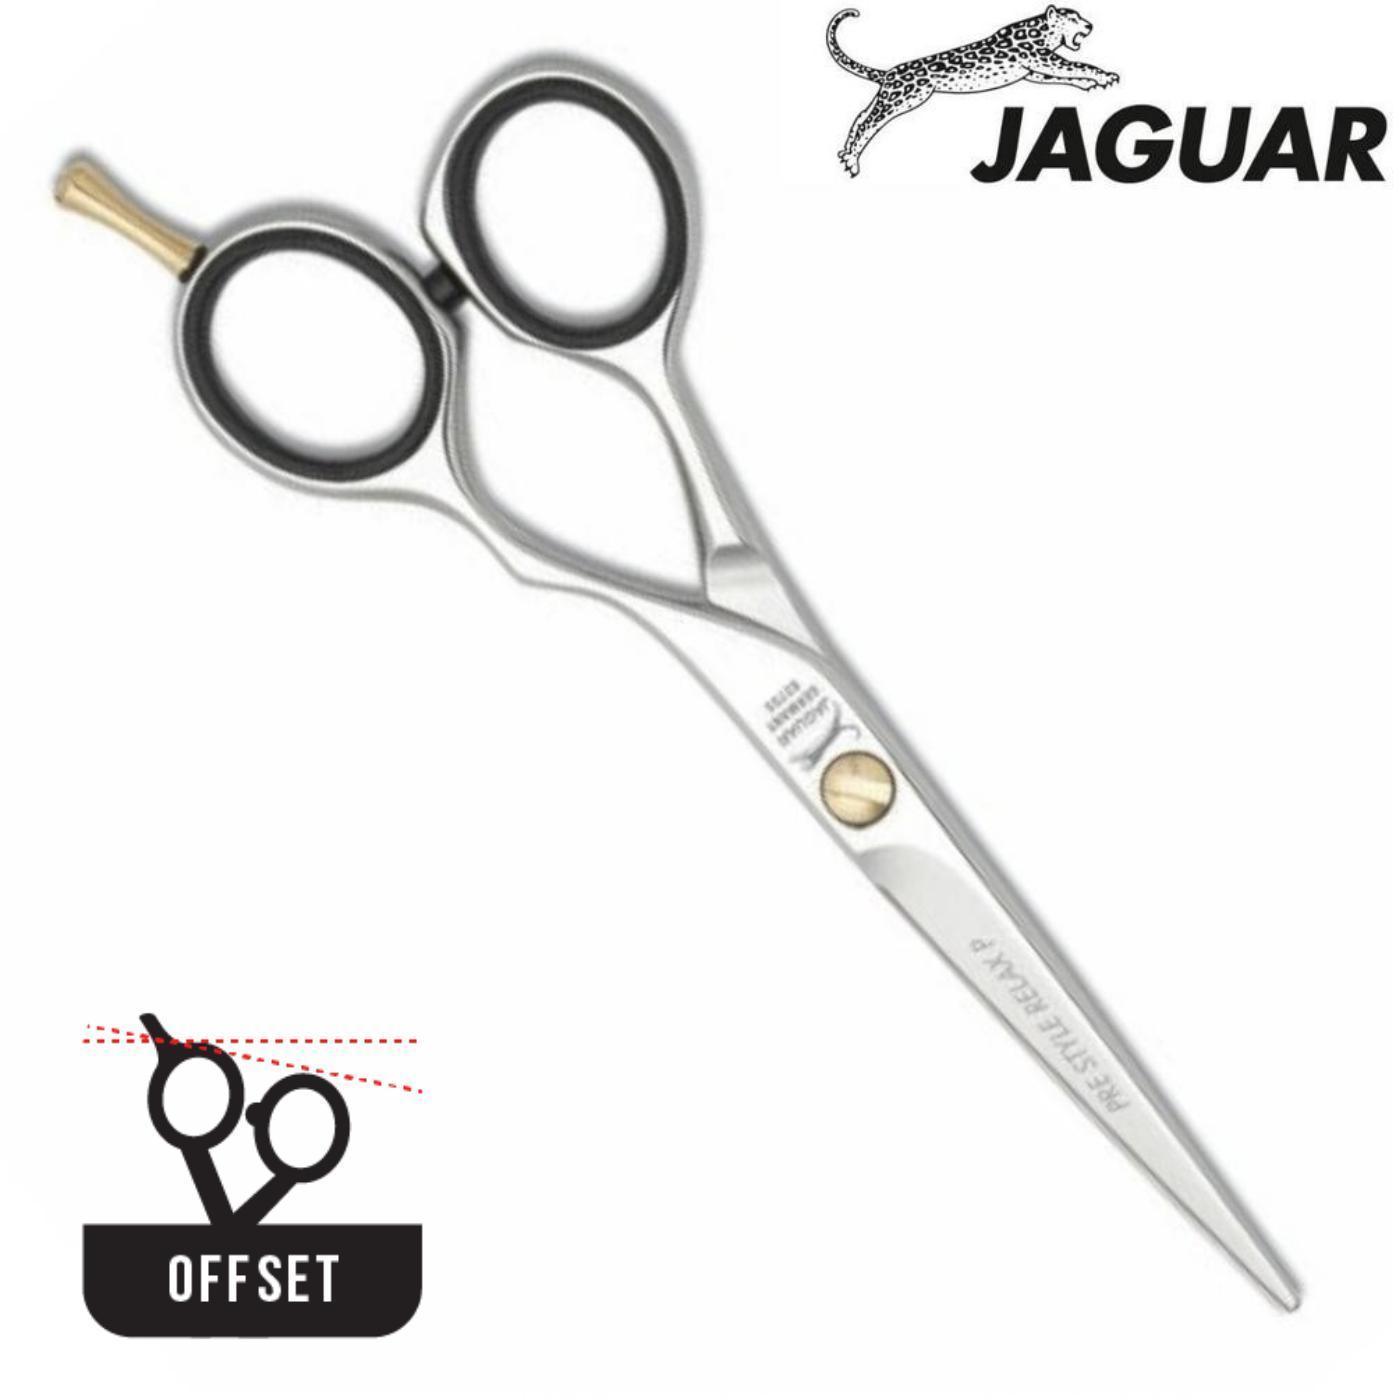 Jaguar Pre Style Relax Hair Cutting Scissors - Japan Scissors